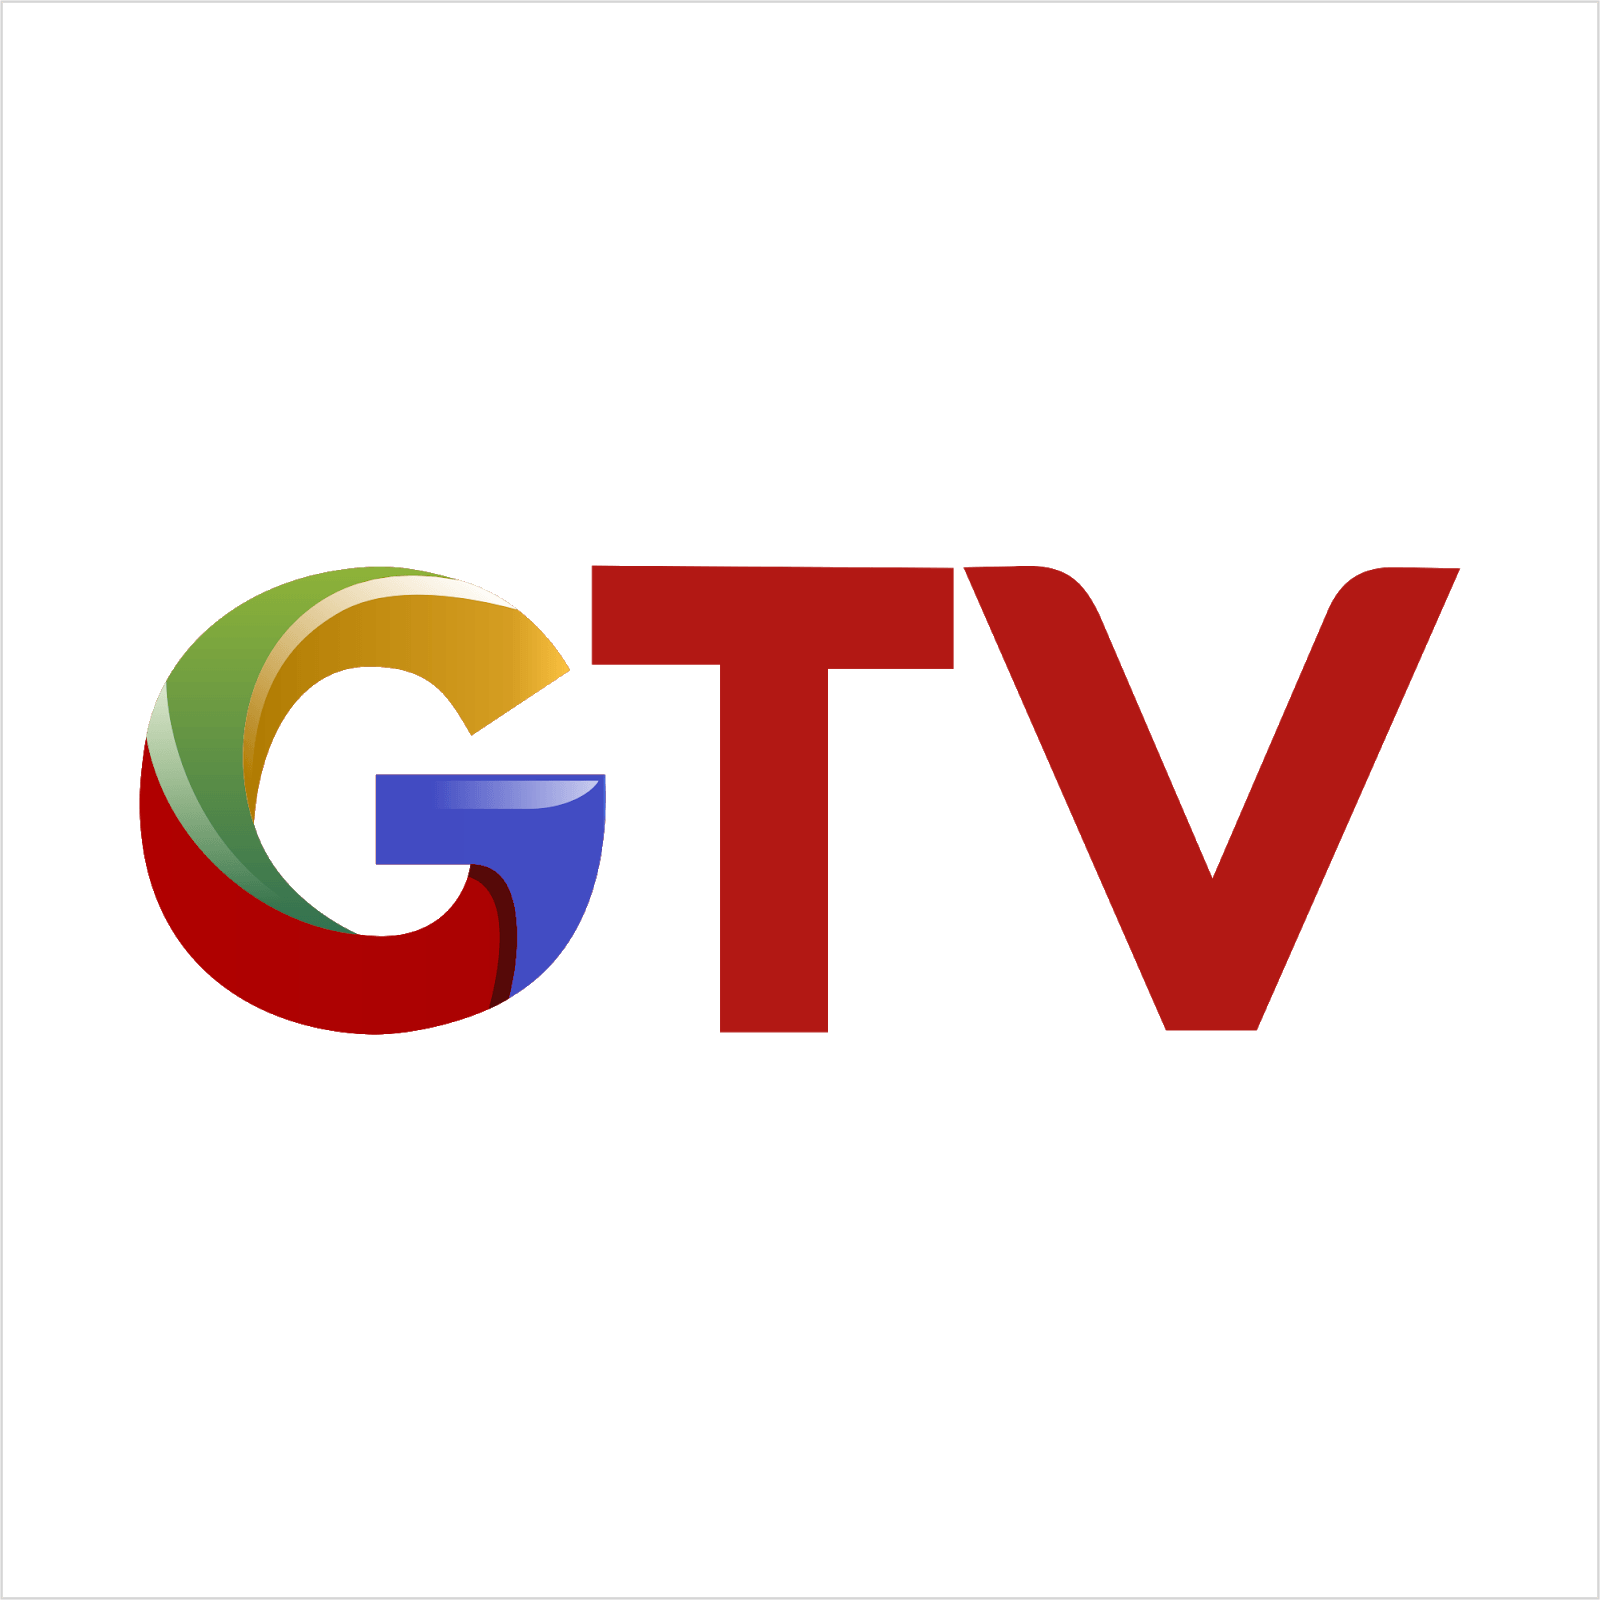 GTV Logo - GTV Logo vector (.cdr) Free Download. Free Download